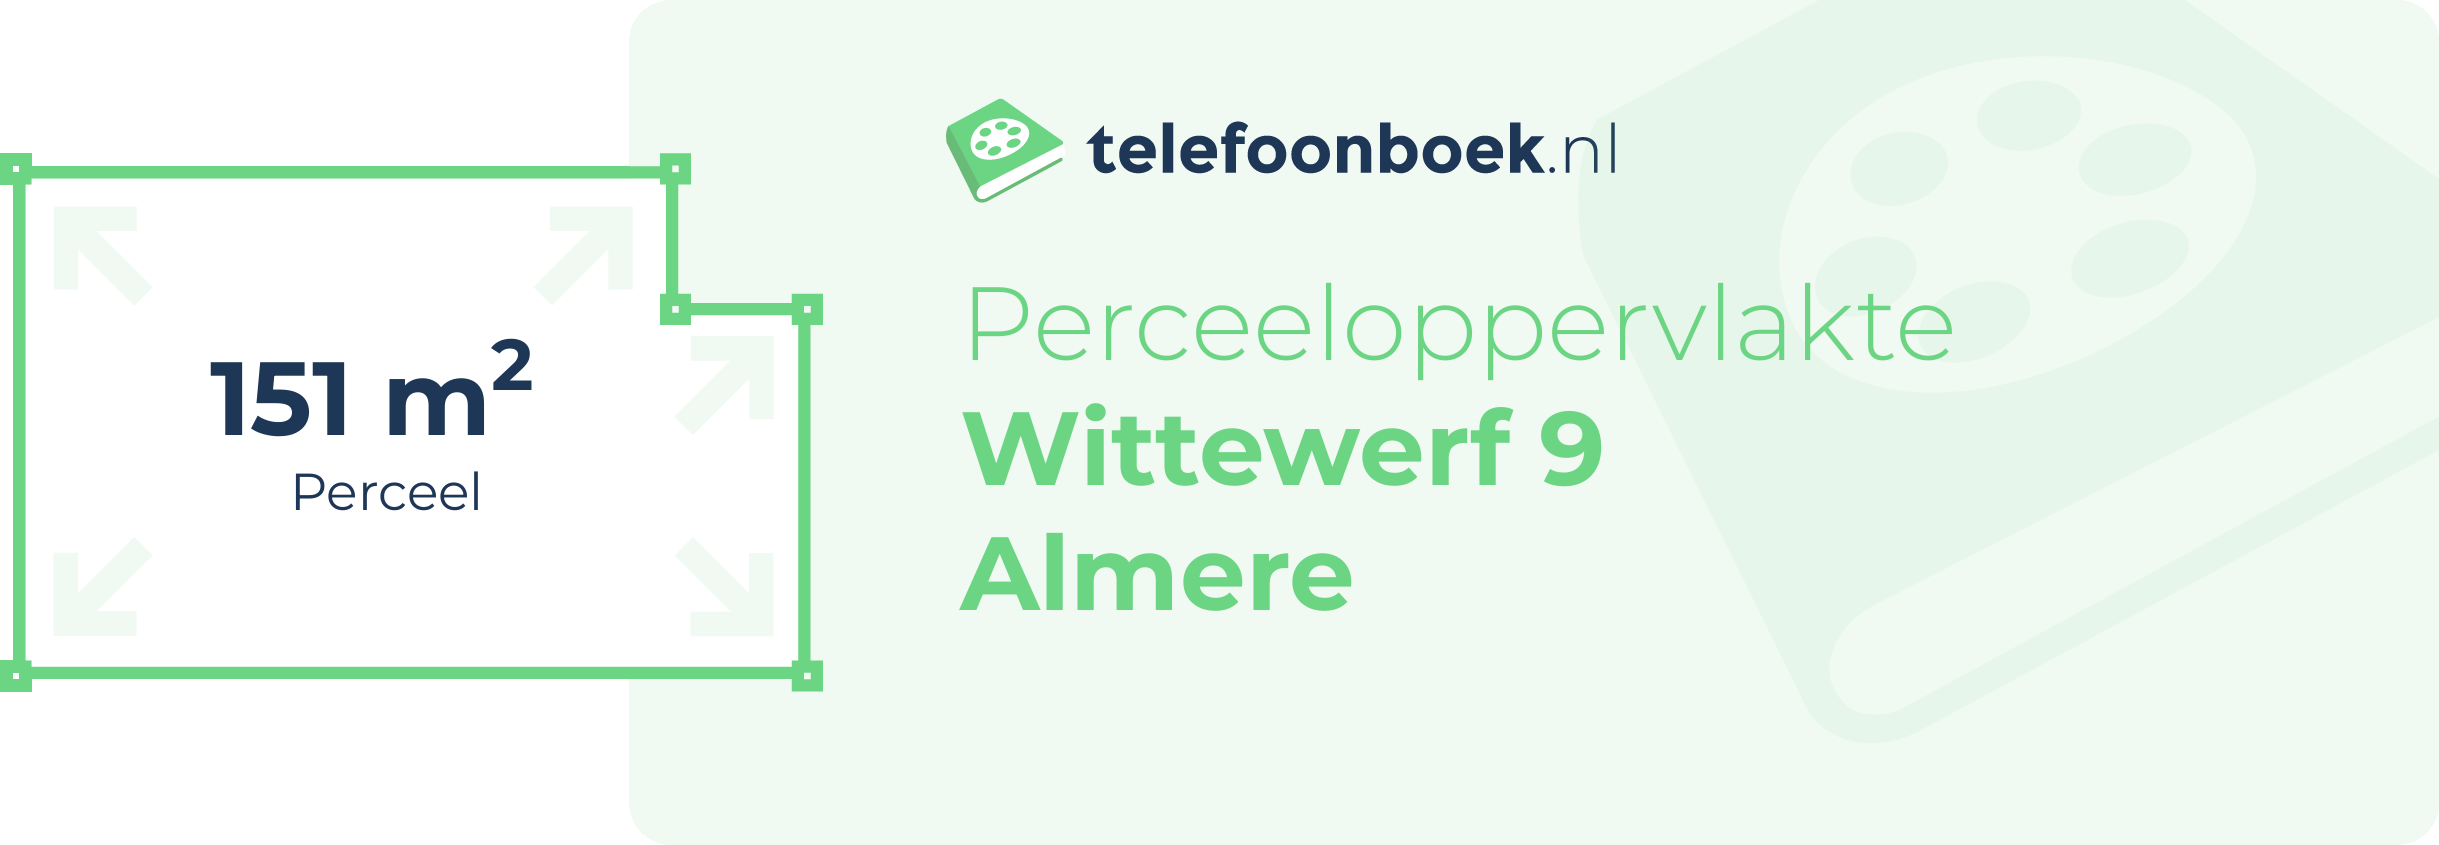 Perceeloppervlakte Wittewerf 9 Almere